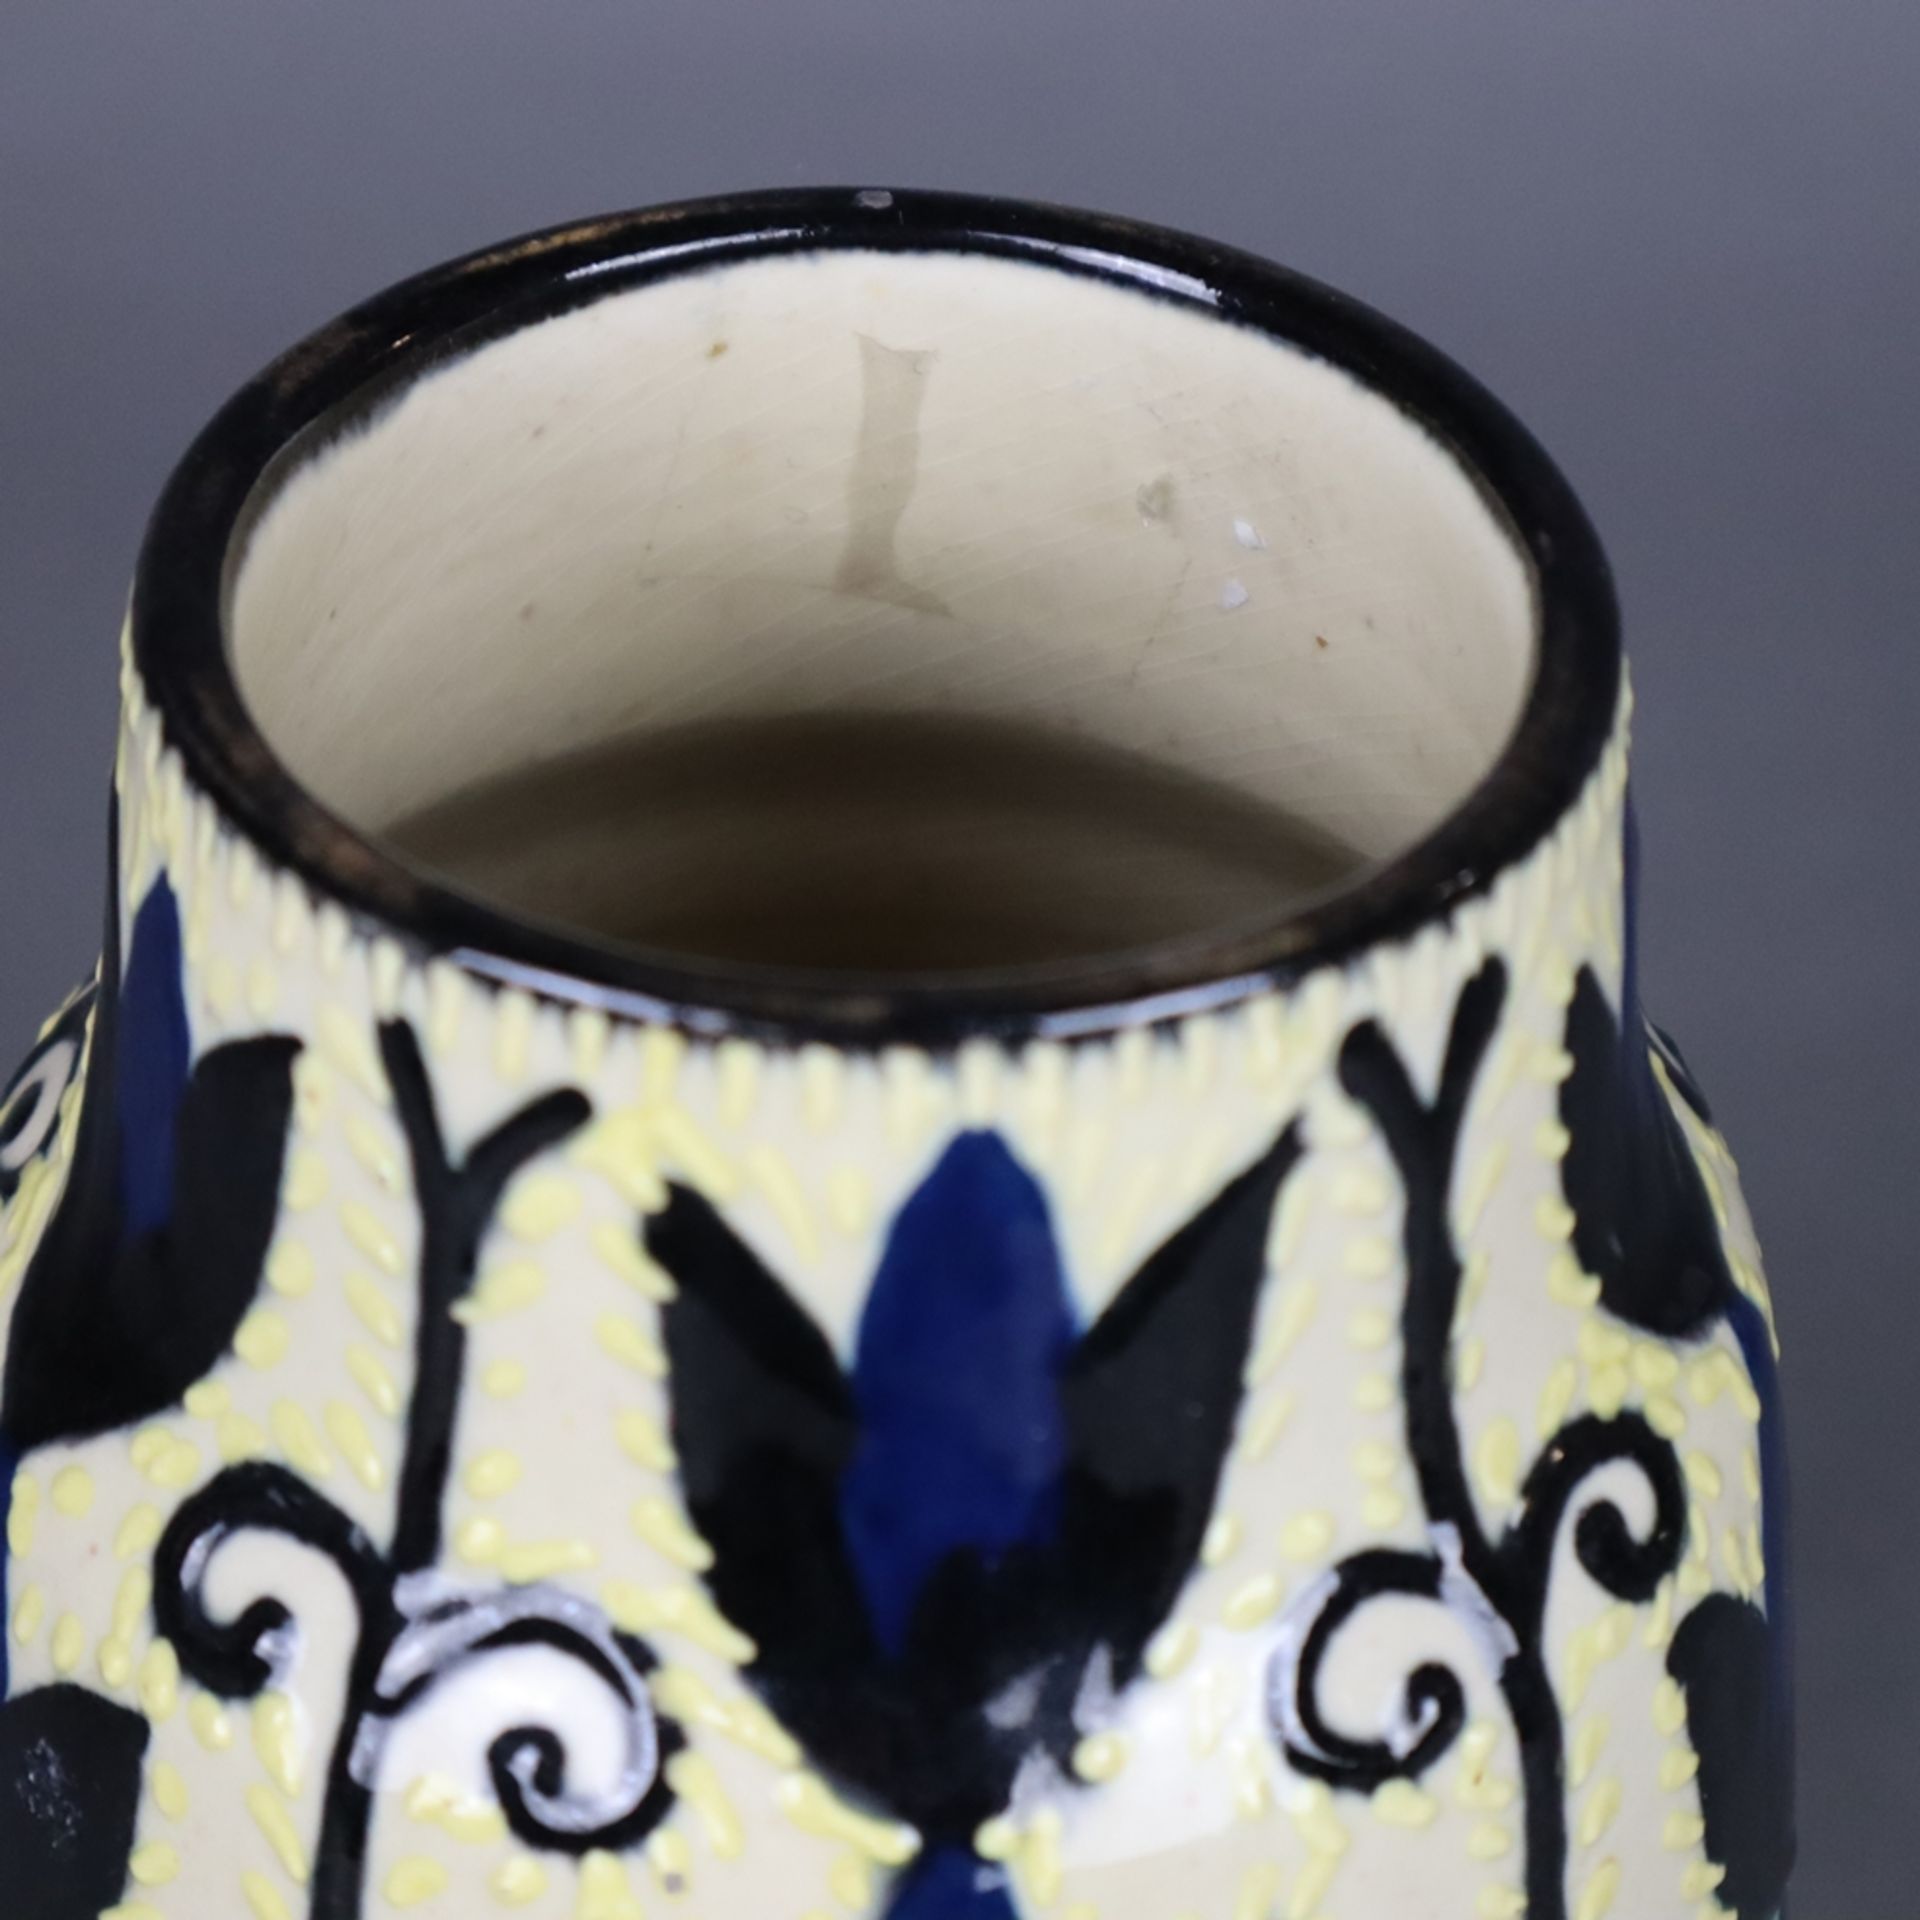 Keramikvase - Tonwerke Kandern, nach 1915, Mod.nr.: 953, konisch zulaufende For - Image 2 of 6